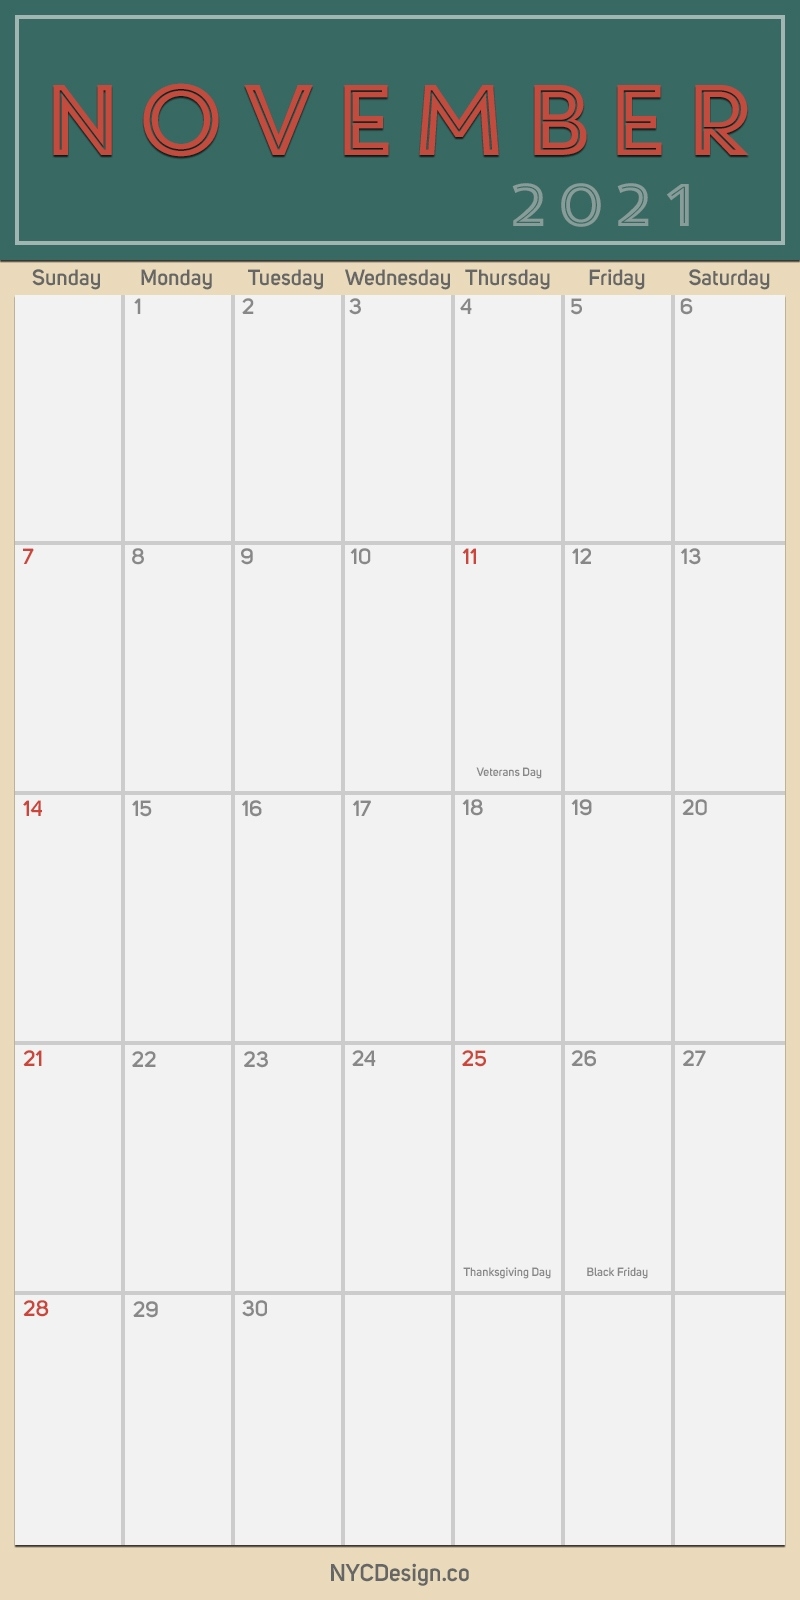 2021 November - Monthly Calendar With Holidays, Printable Free, Pdf - Sunday Start - Nycdesign November 2021 Calendar Holidays